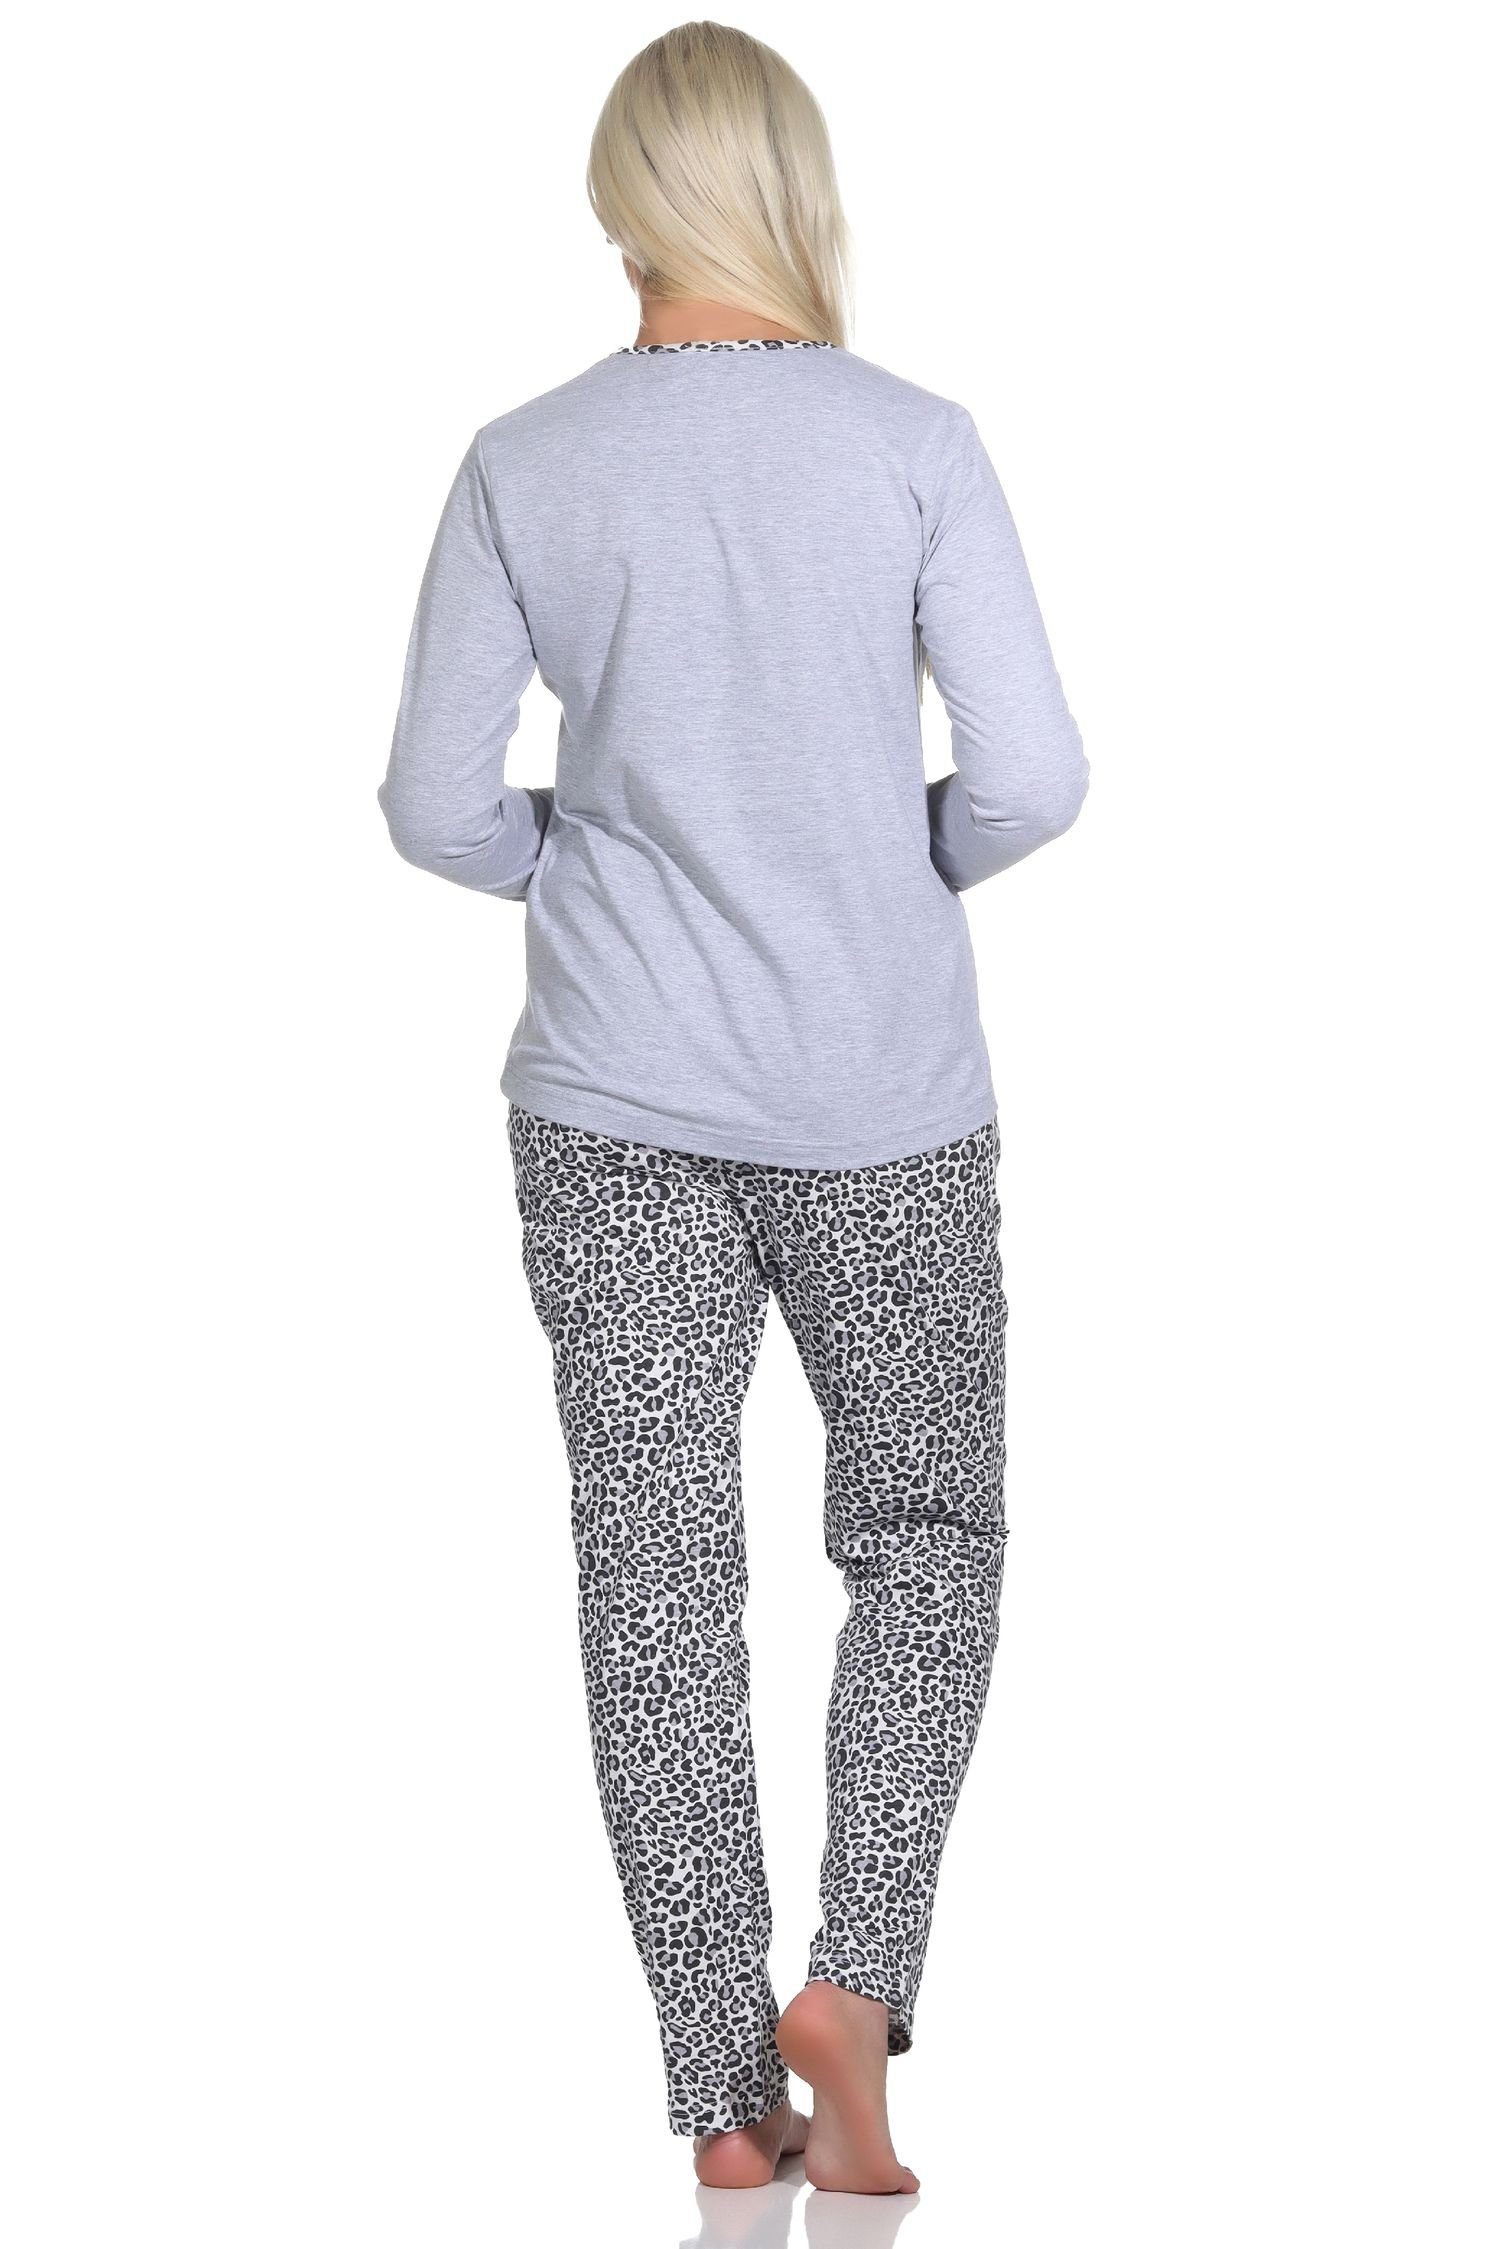 Pyjama mit Normann Damen grau-mel. Langarm Schlafanzug Tiermotiv, im Animal-Print-Look Hose